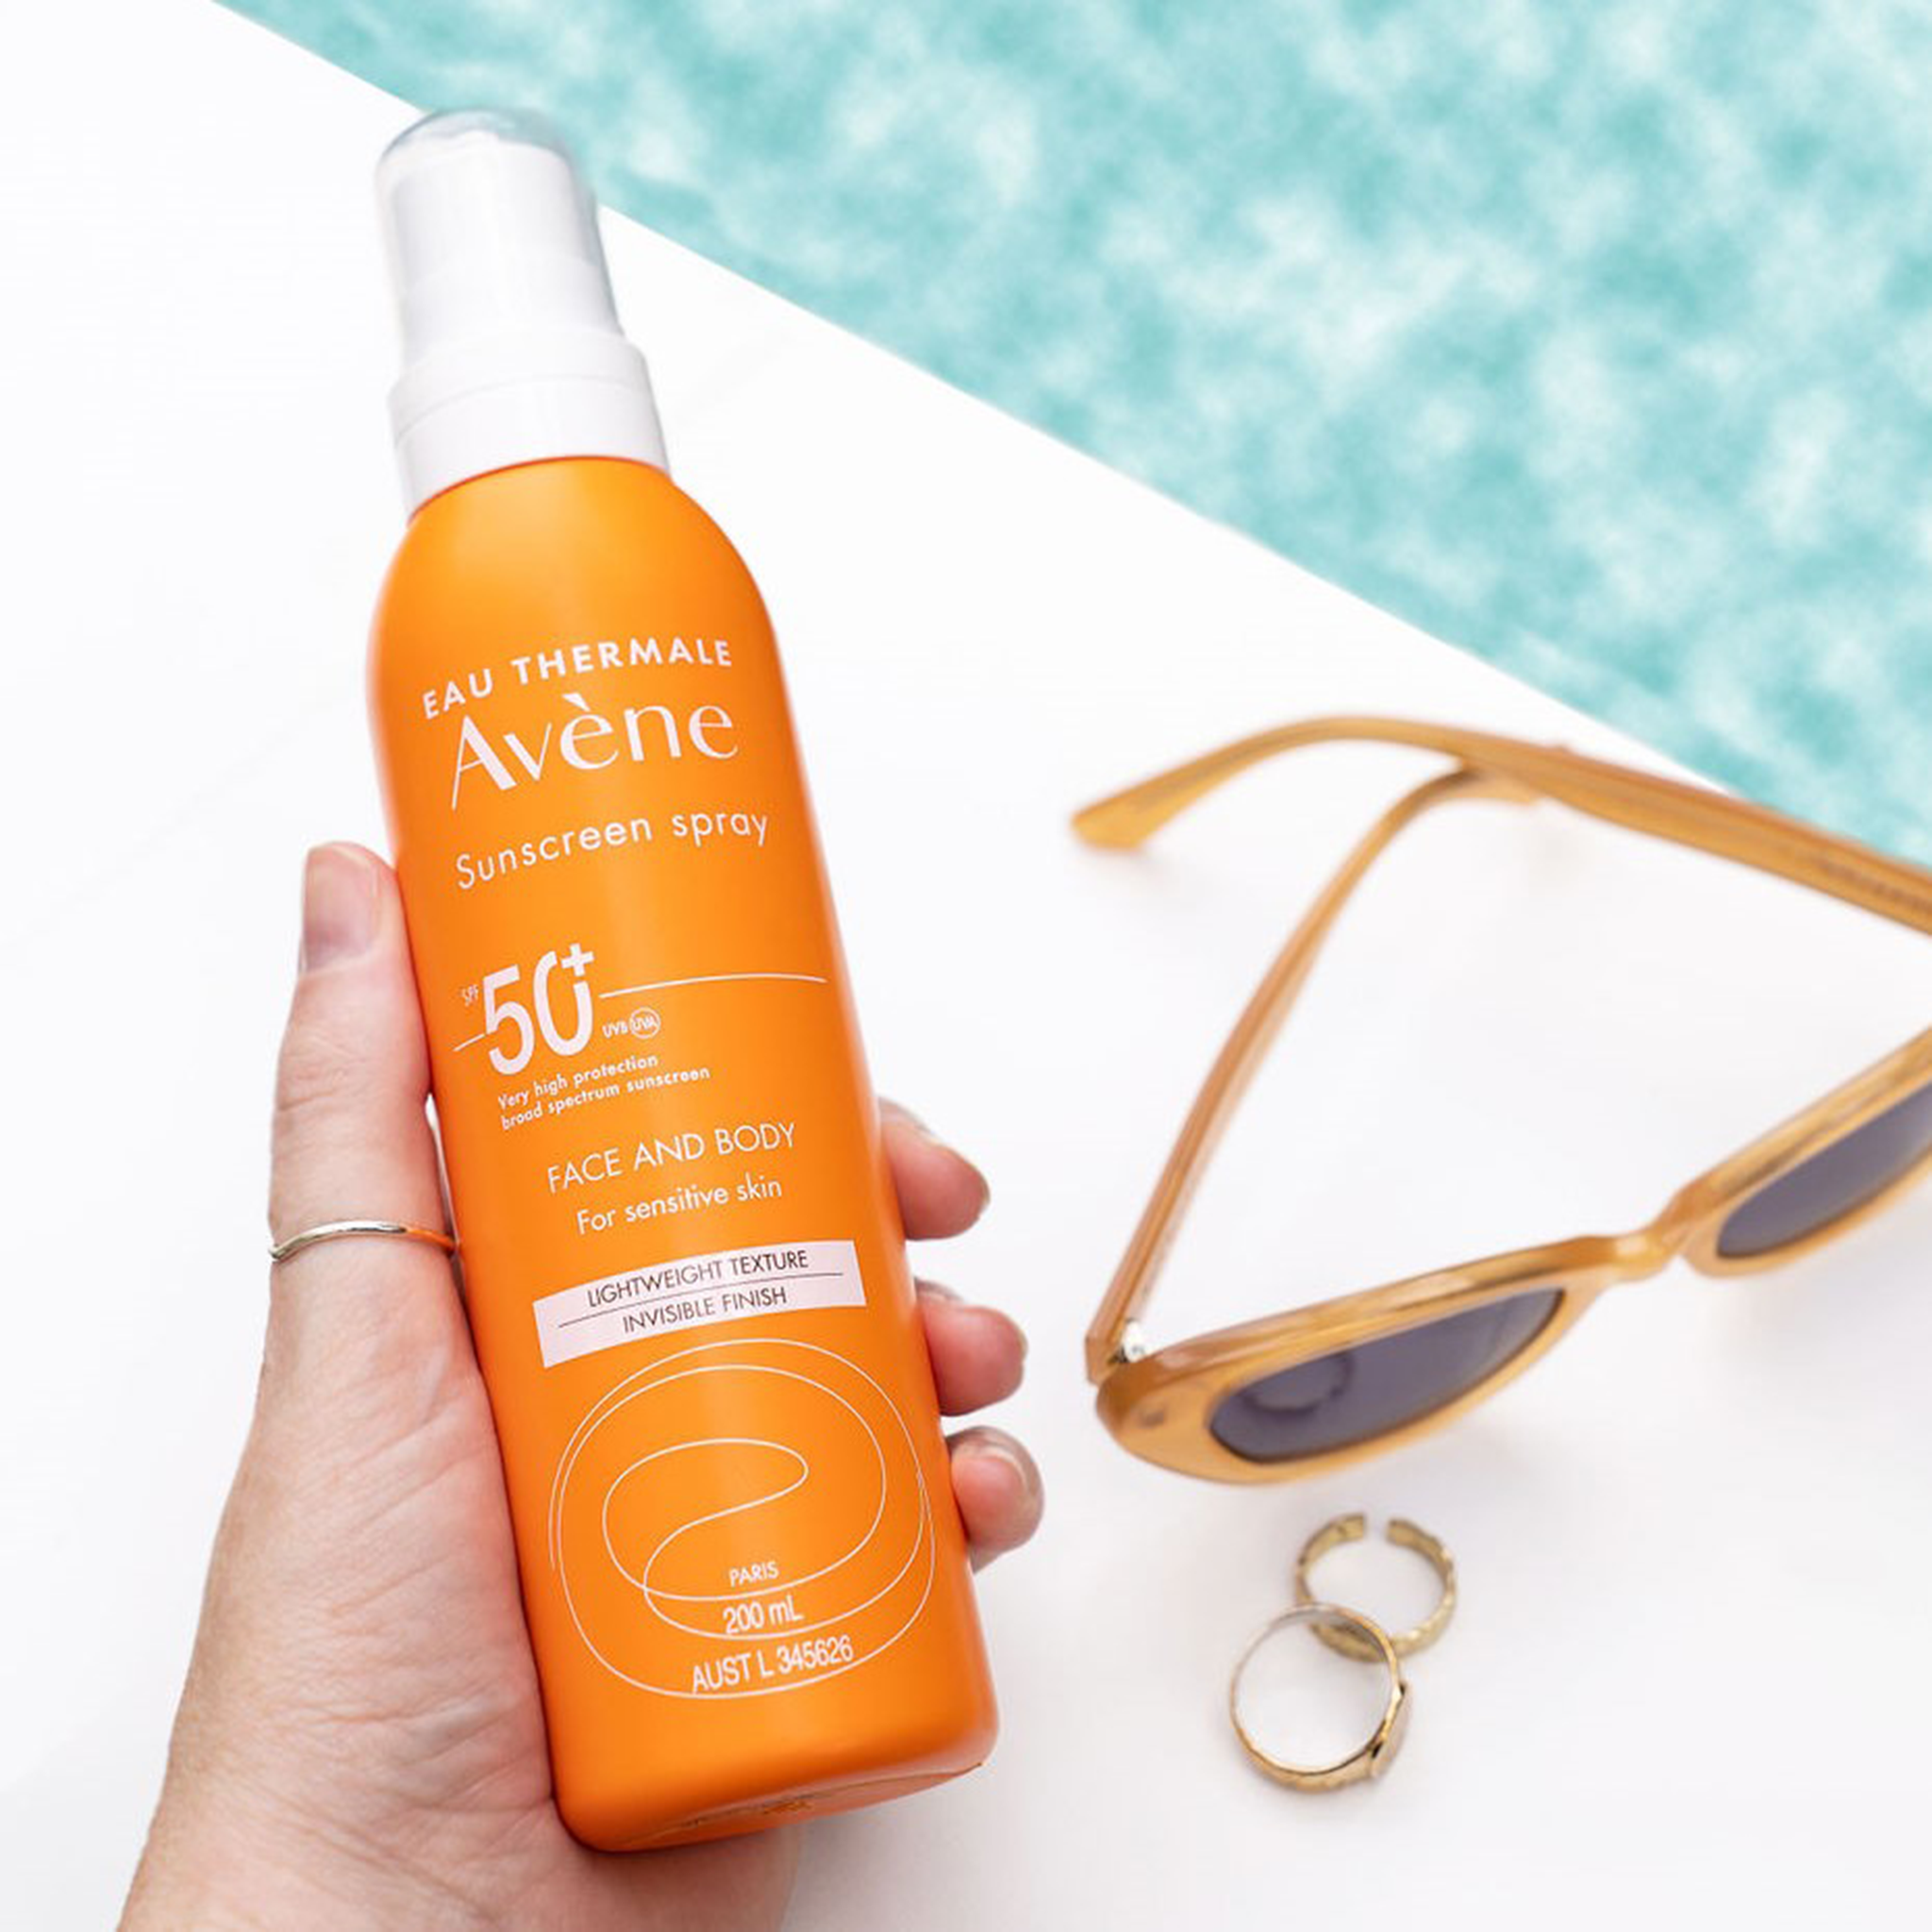 Avène Sunscreen Spray SPF 50+ 200ml - For Sensitive Skin